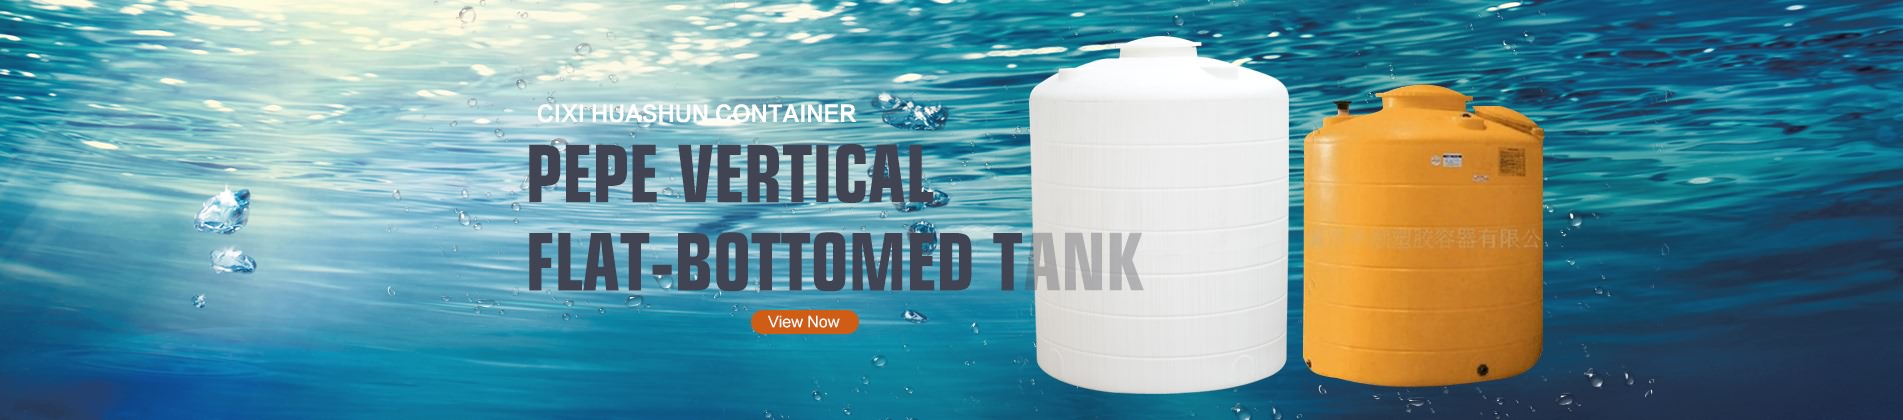 PE Vertical Flat-bottomed Tank